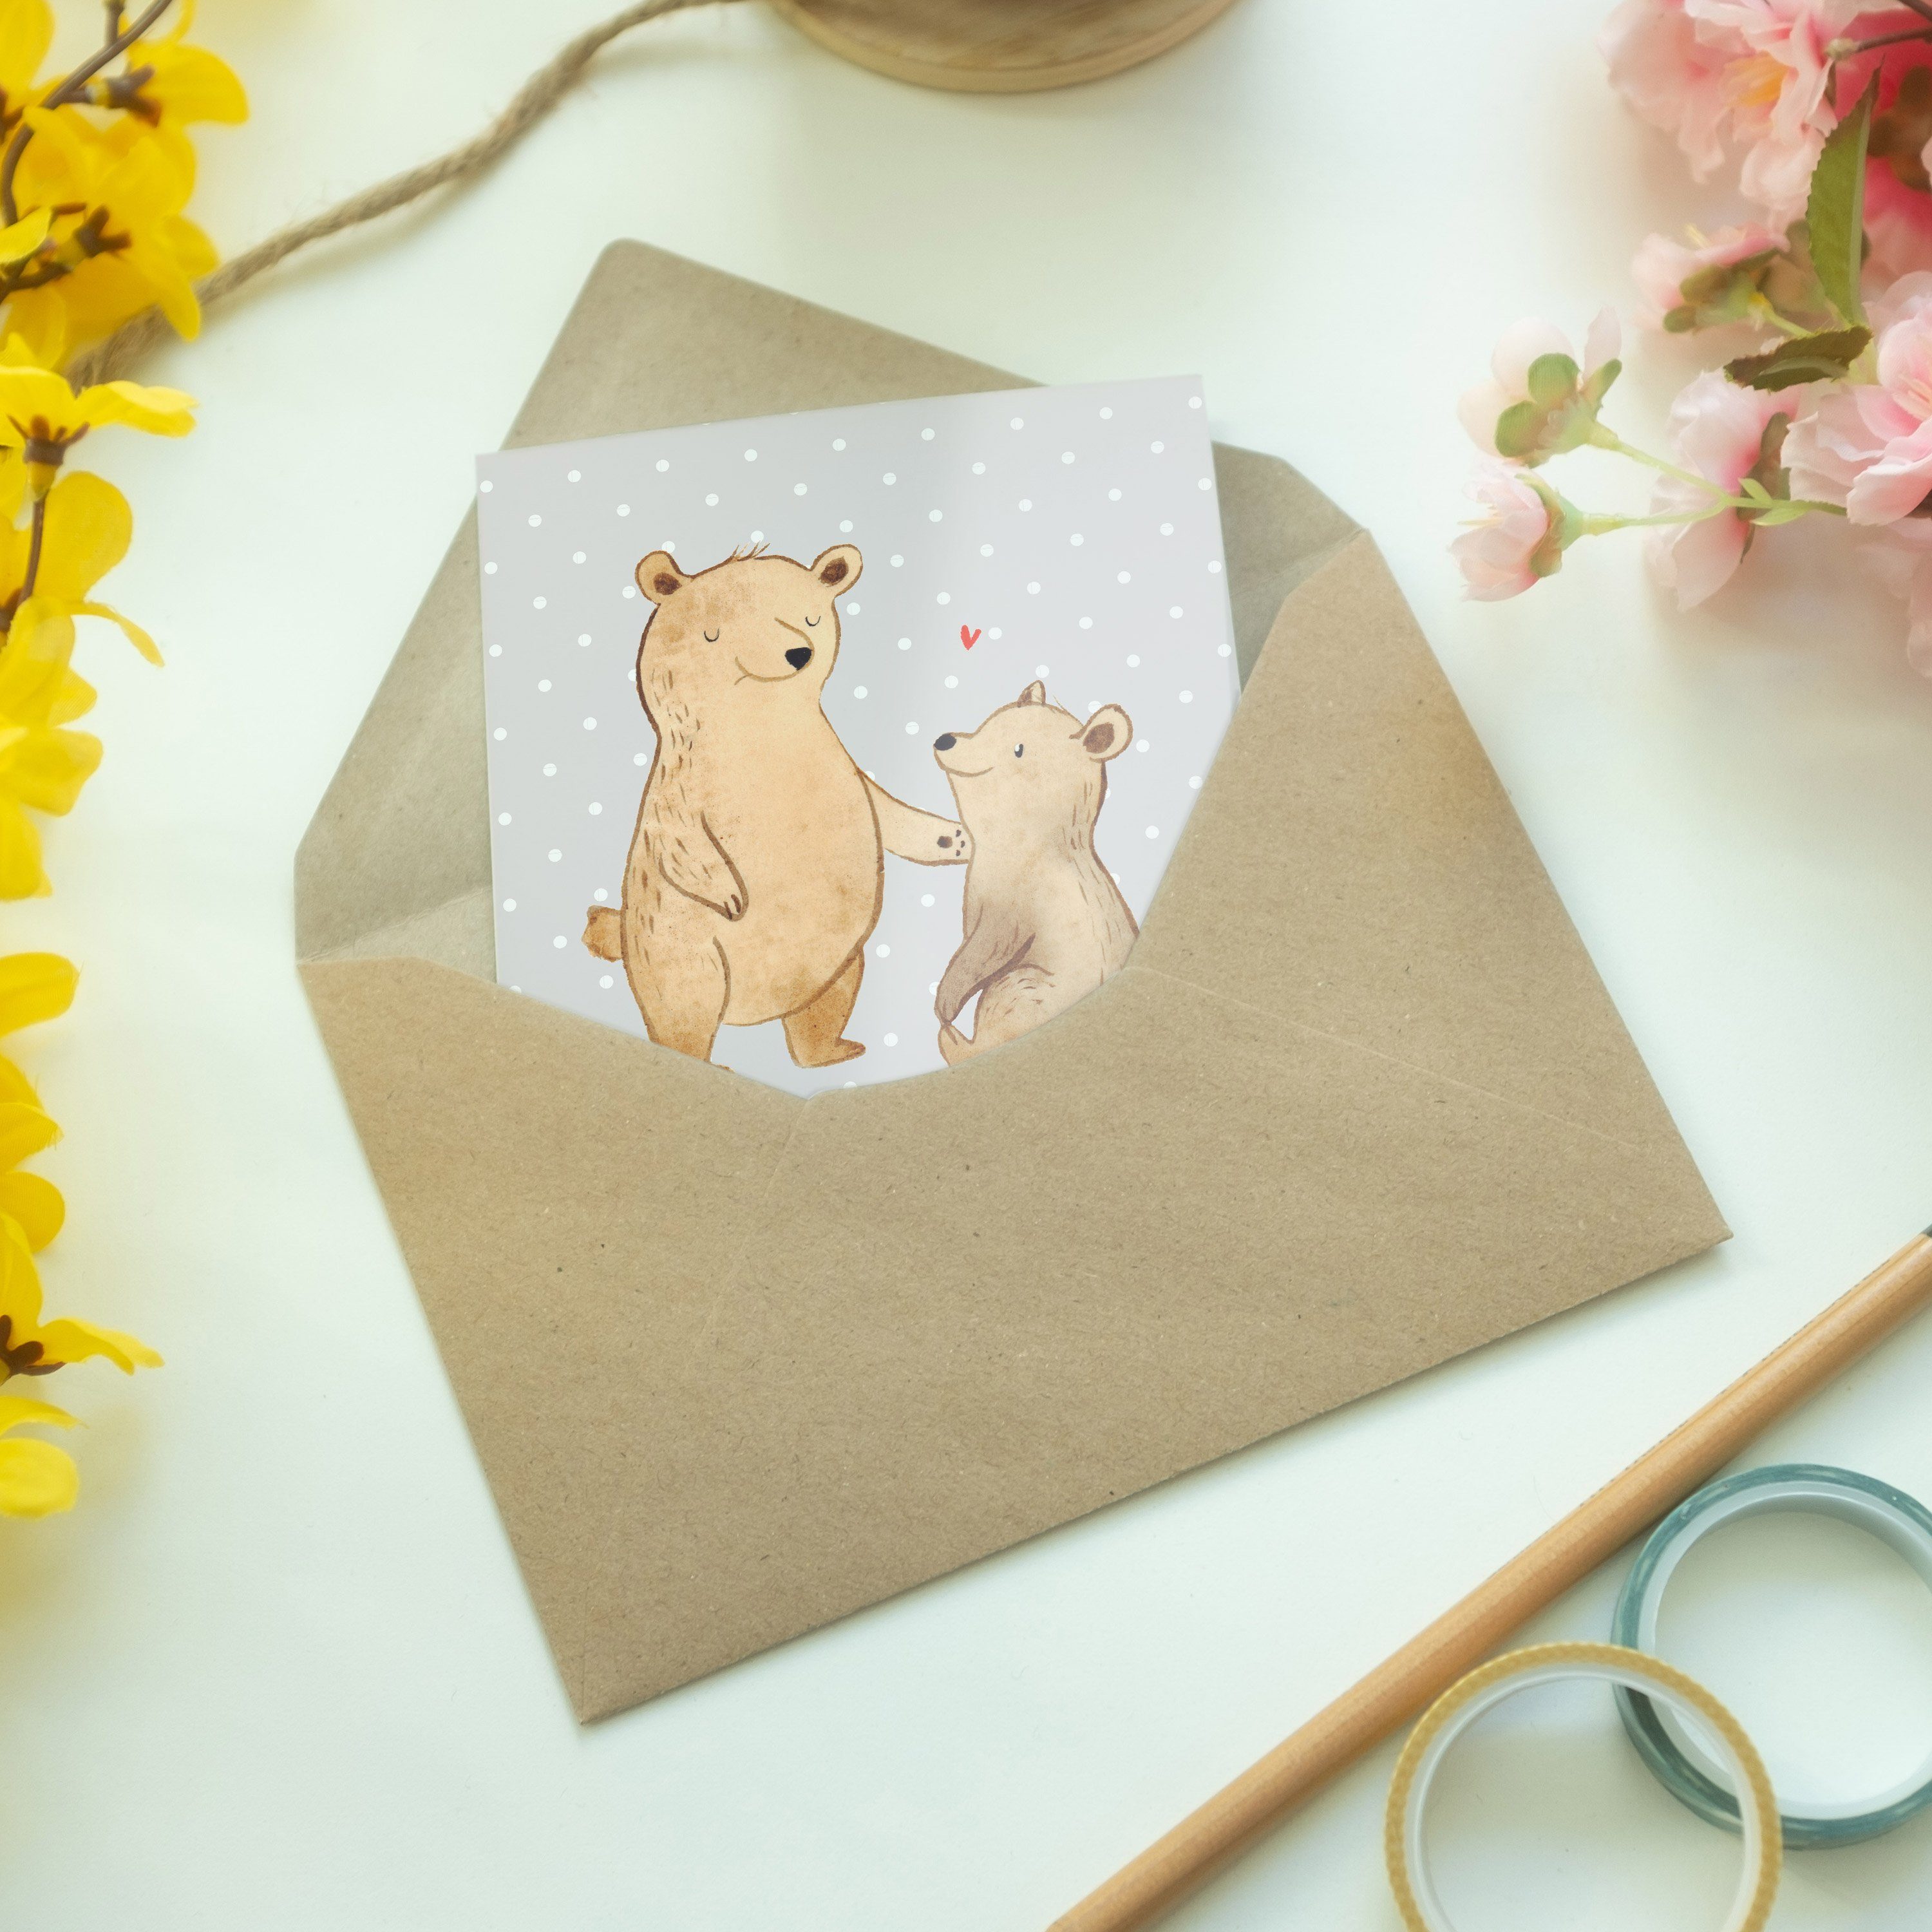 Grußkarte Panda Geschenk, Grau - Mrs. & Großer Bären Mr. - Bär Pastell Glückwunschkarte, Bruder